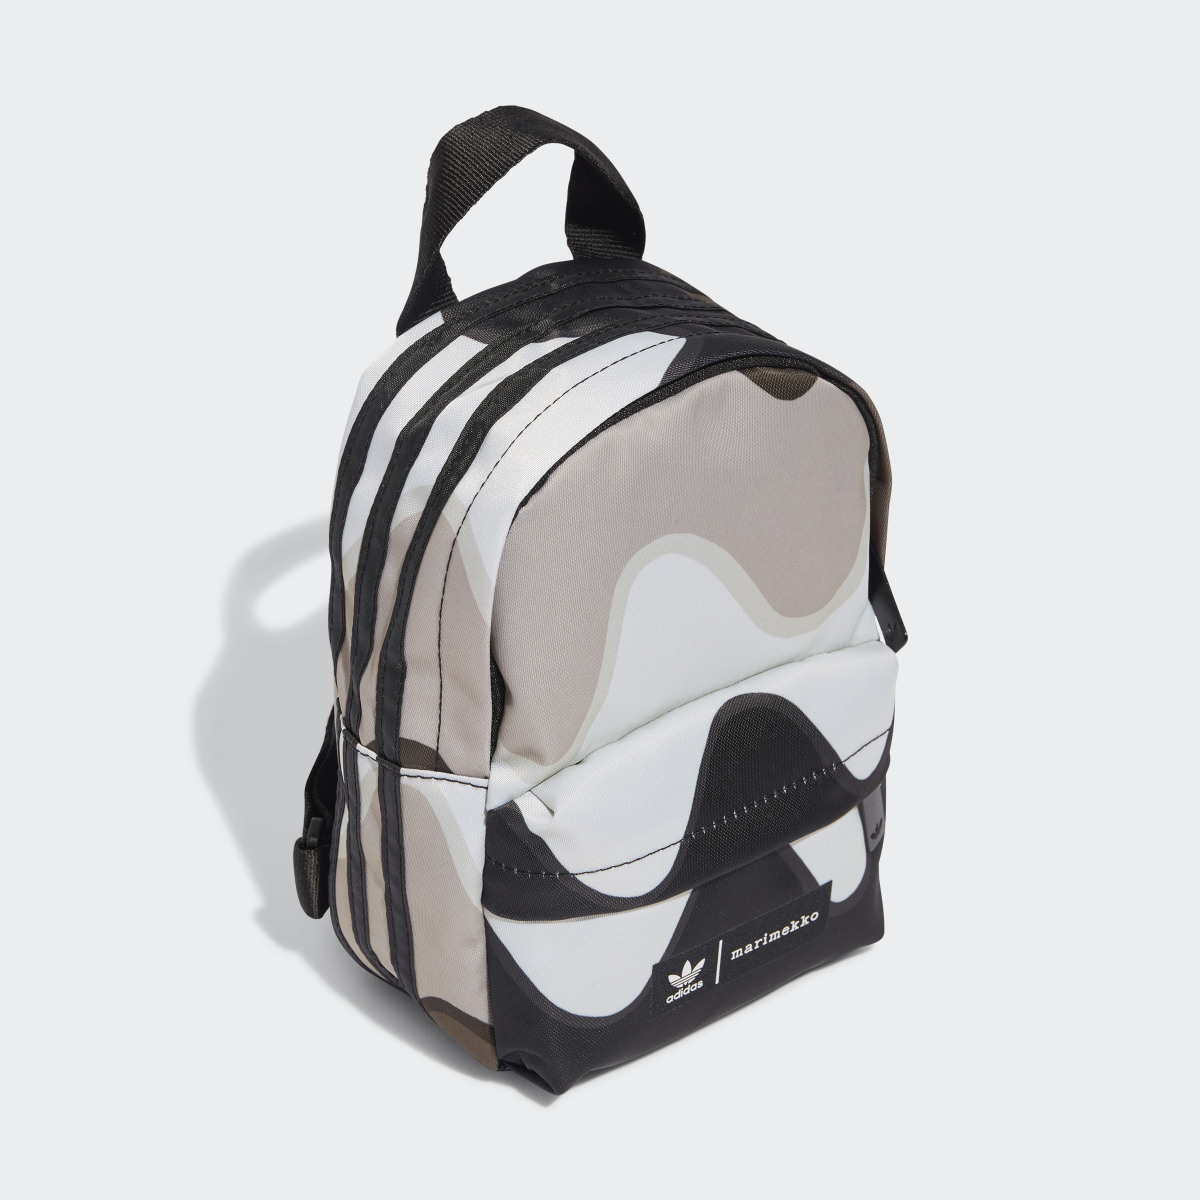 Adidas x Marimekko Mini Backpack. 4